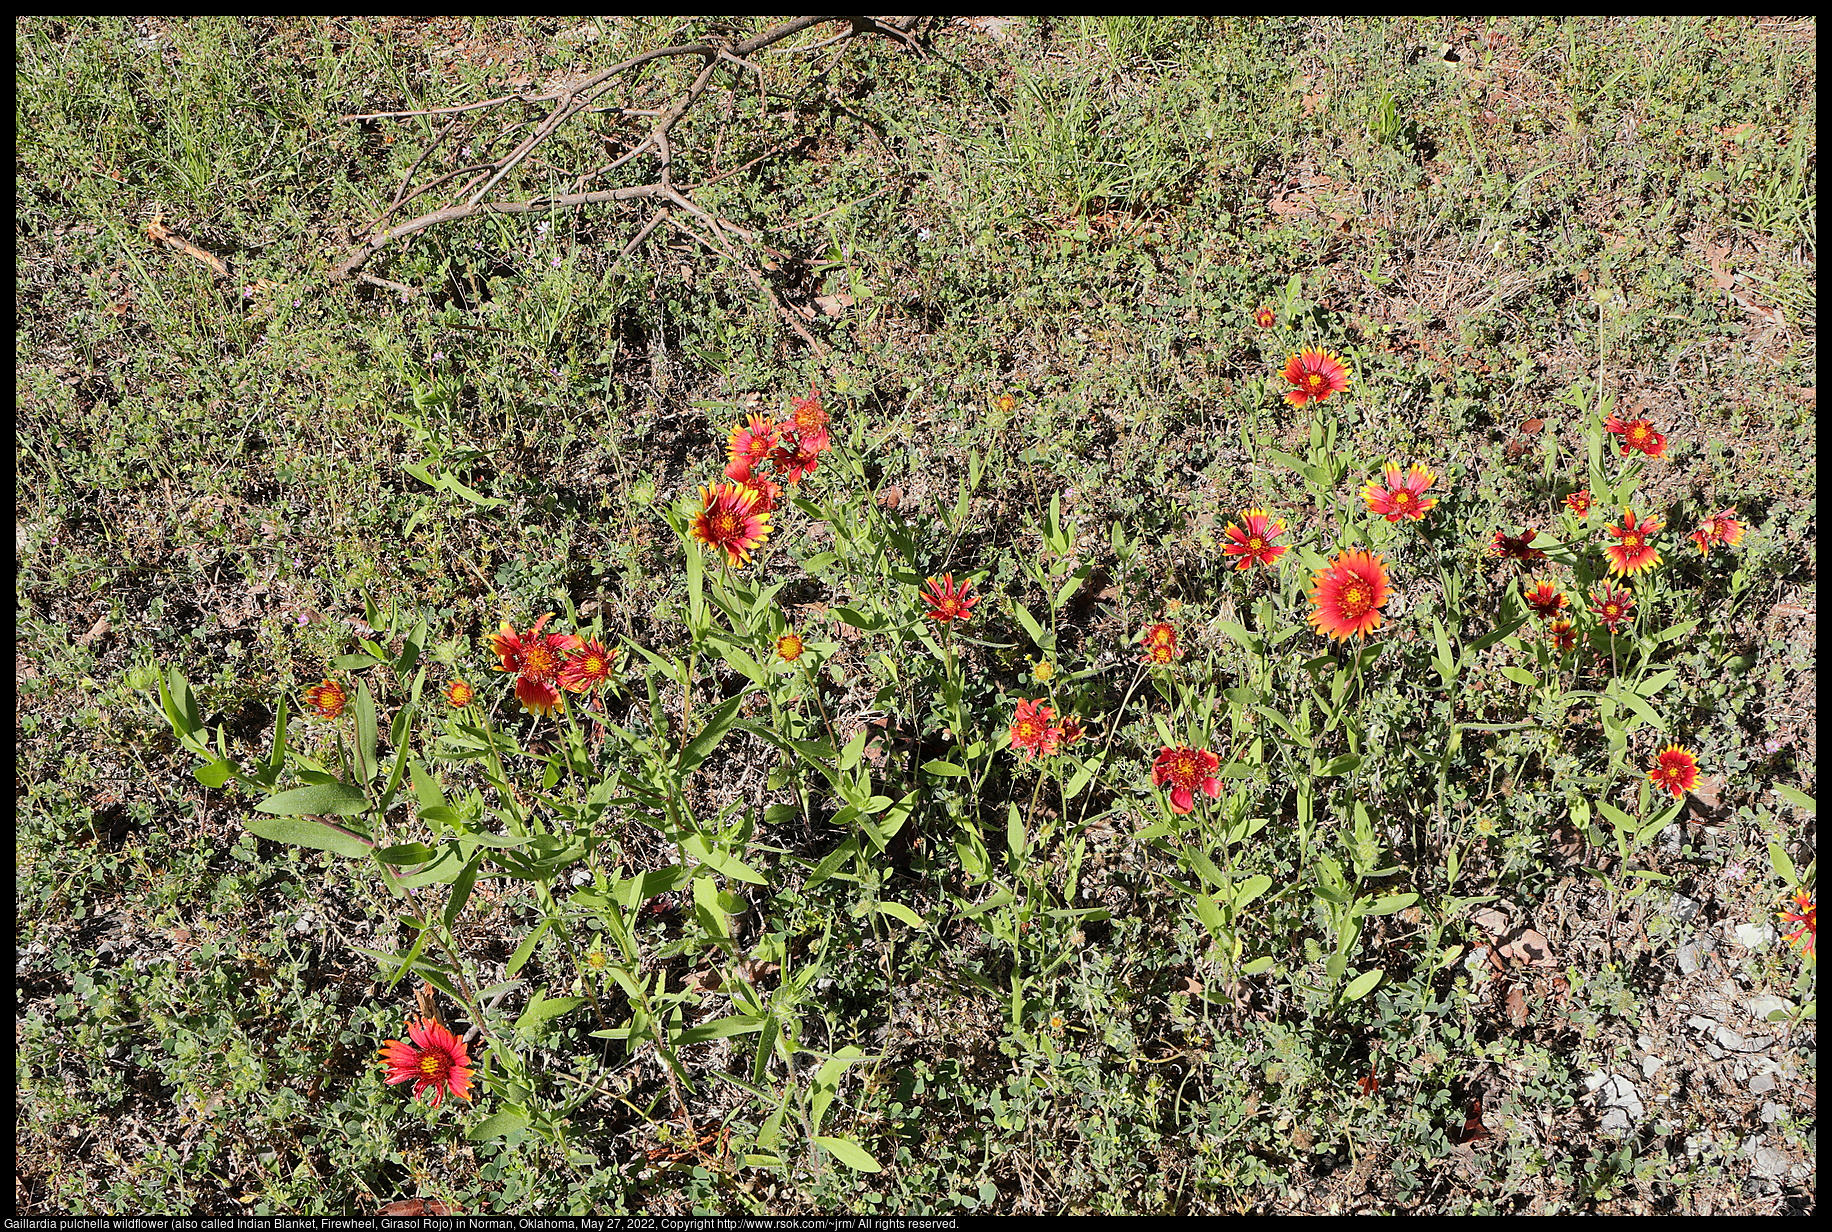 Gaillardia pulchella wildflower (also called Indian Blanket, Firewheel, Girasol Rojo) in Norman, Oklahoma, May 27, 2022